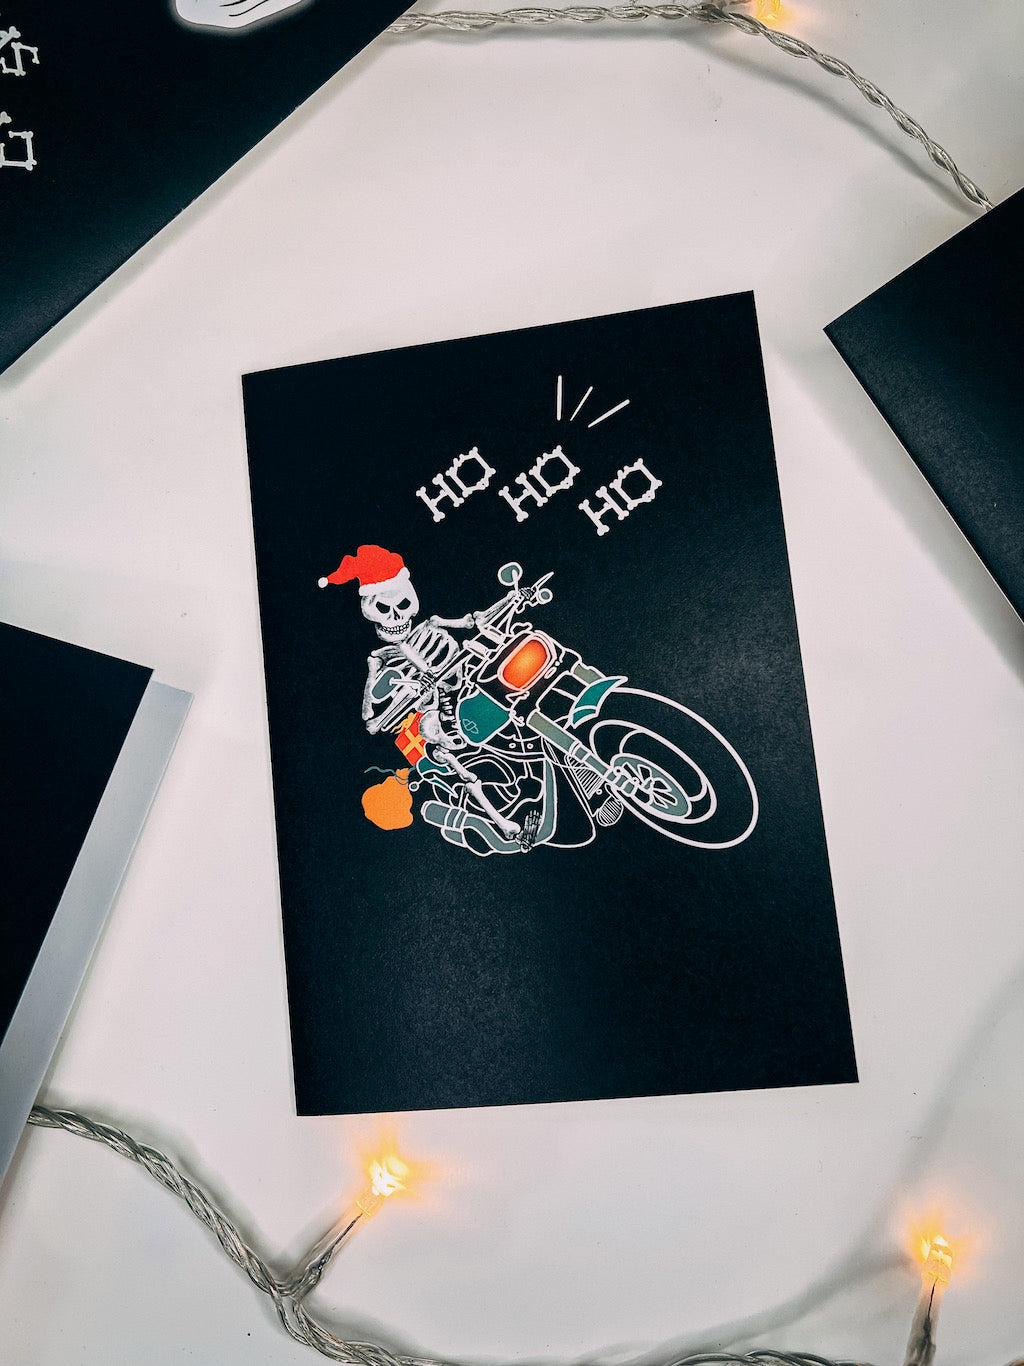 Wayward black greetings card with Biker Skeleton Santa Claus on a motorbike with bone lettering saying Ho Ho Ho